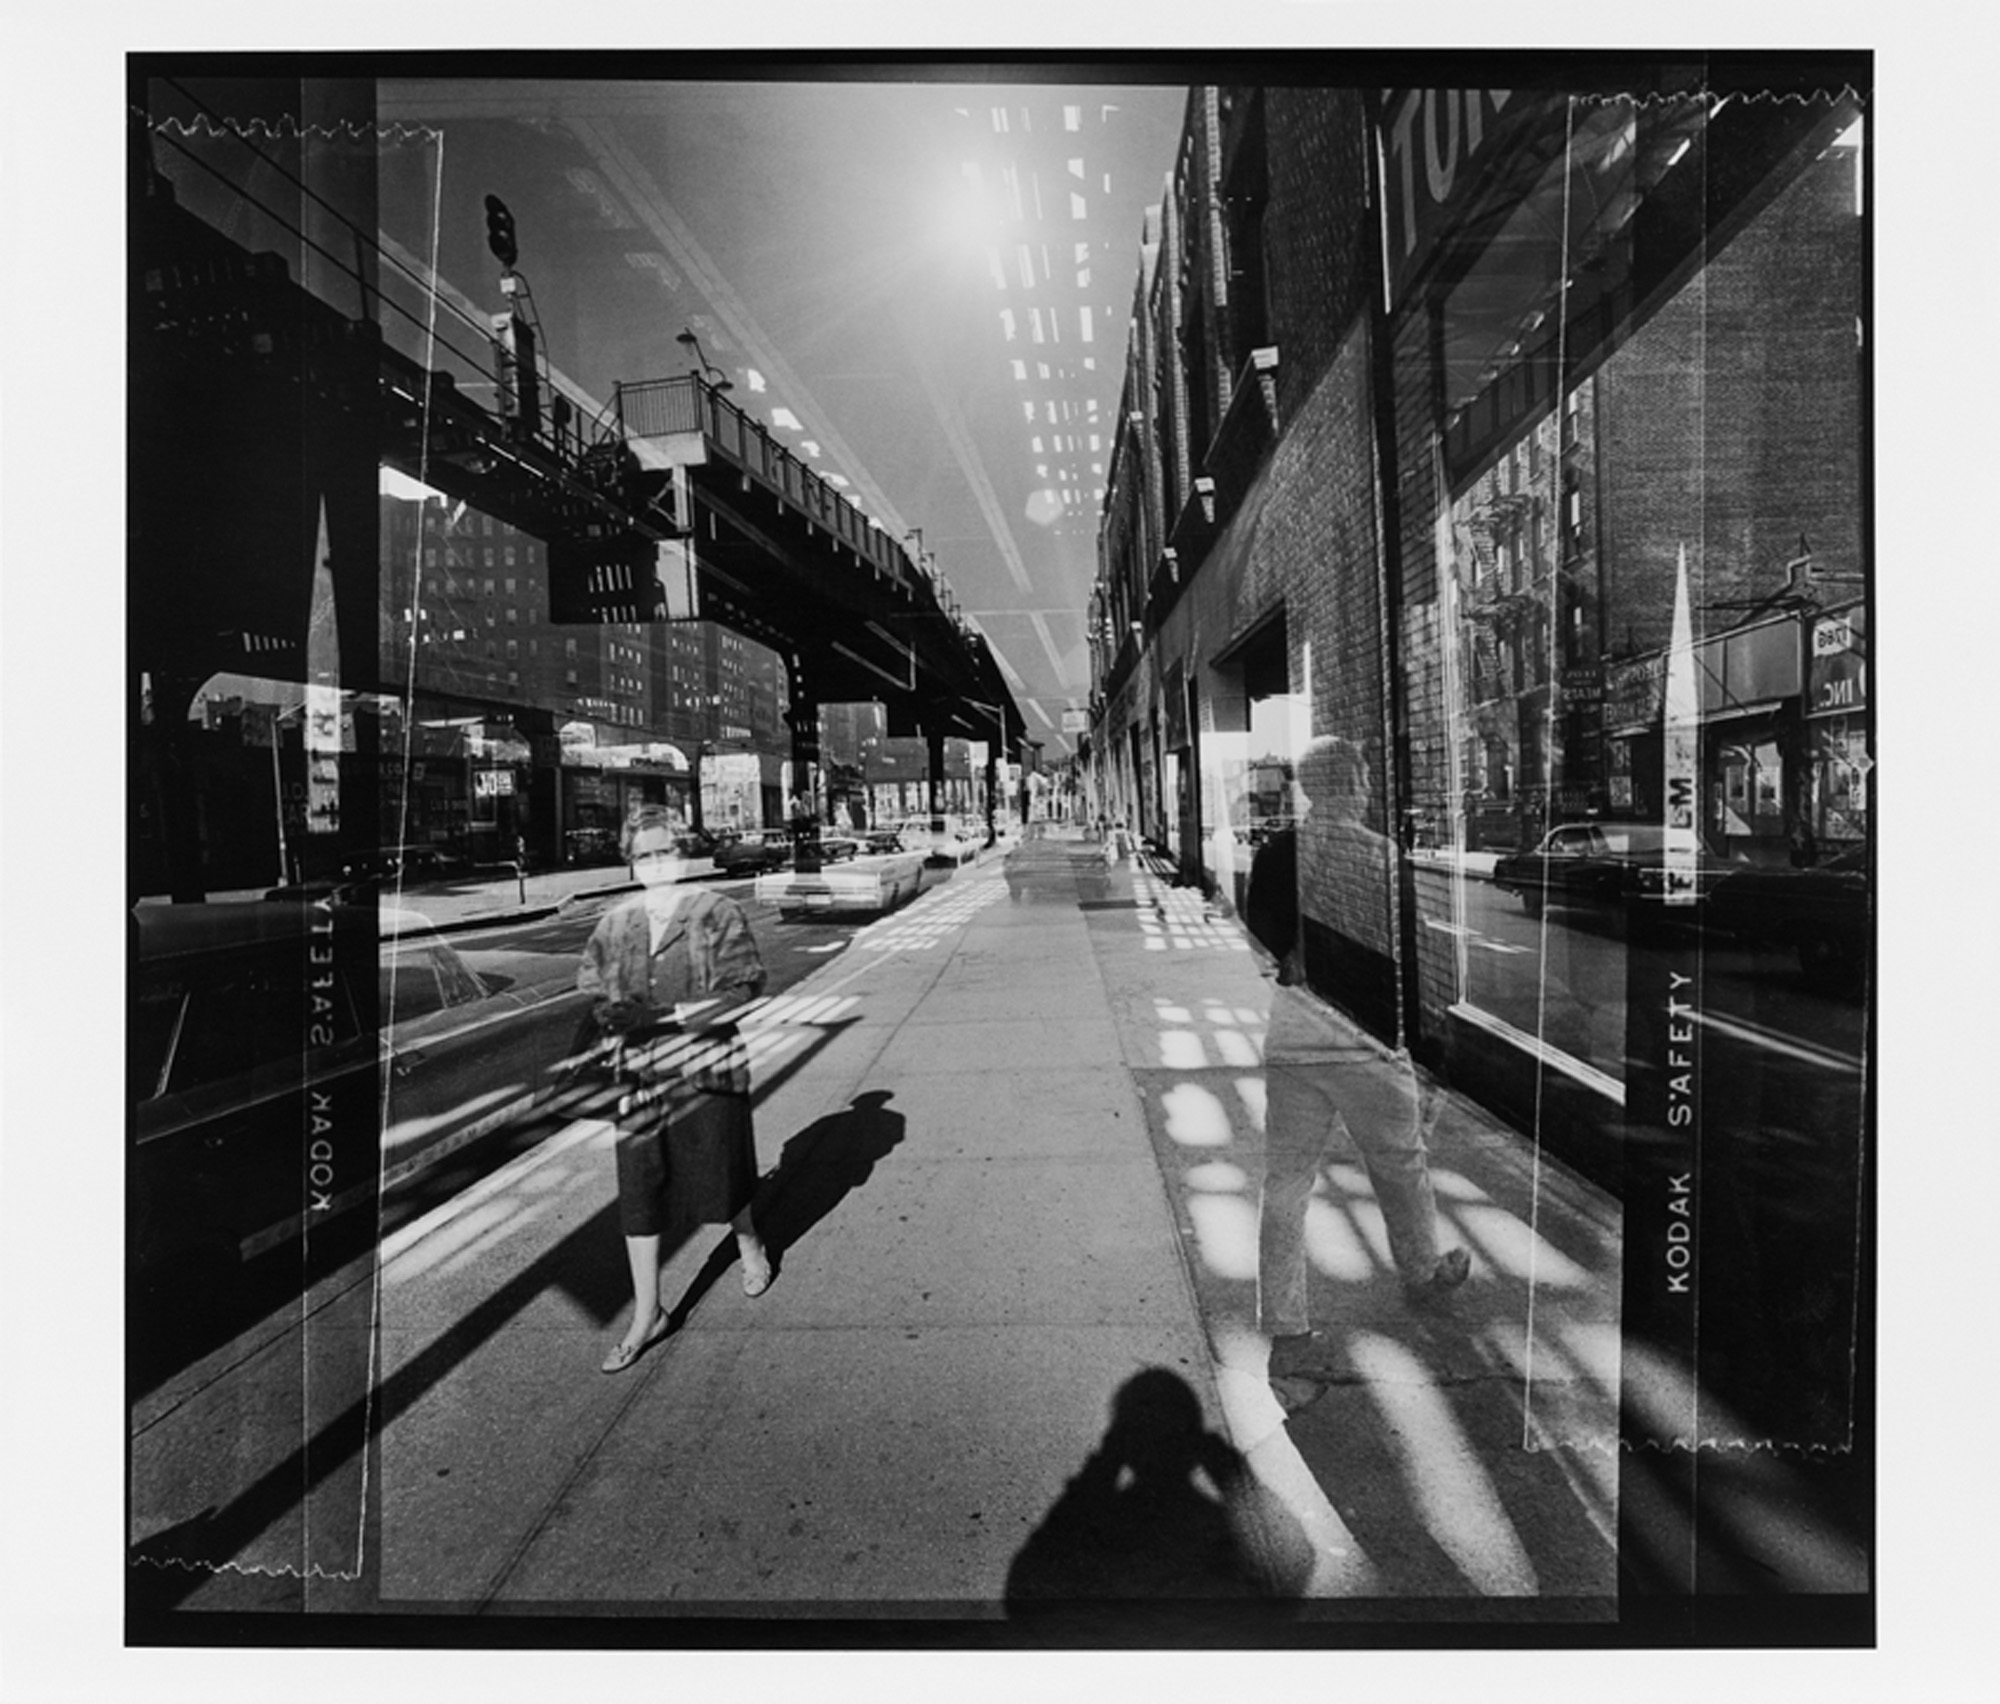 Artist Photographer Timm Rautert, Parrotta Contemporary Art,Safety Film (New York – Stock Exchange, Walser), 1969/2012